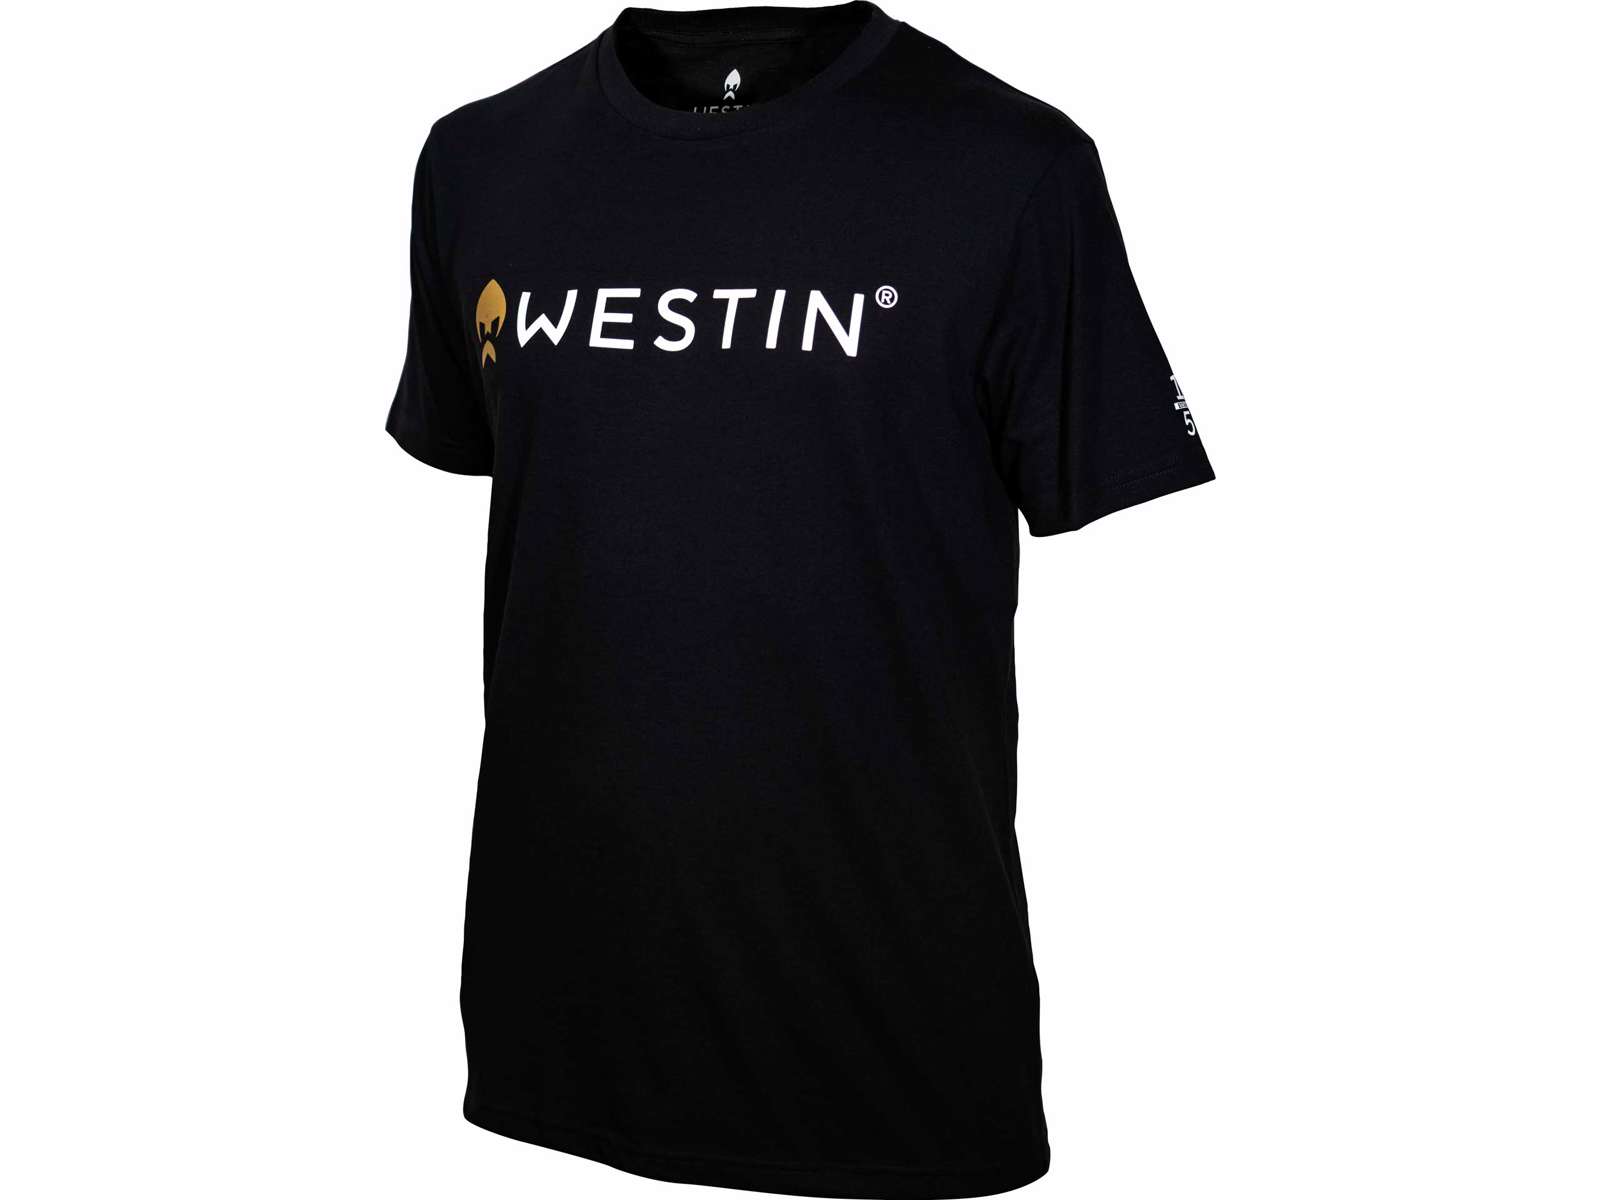 Westin triko Original T-Shirt XL Black